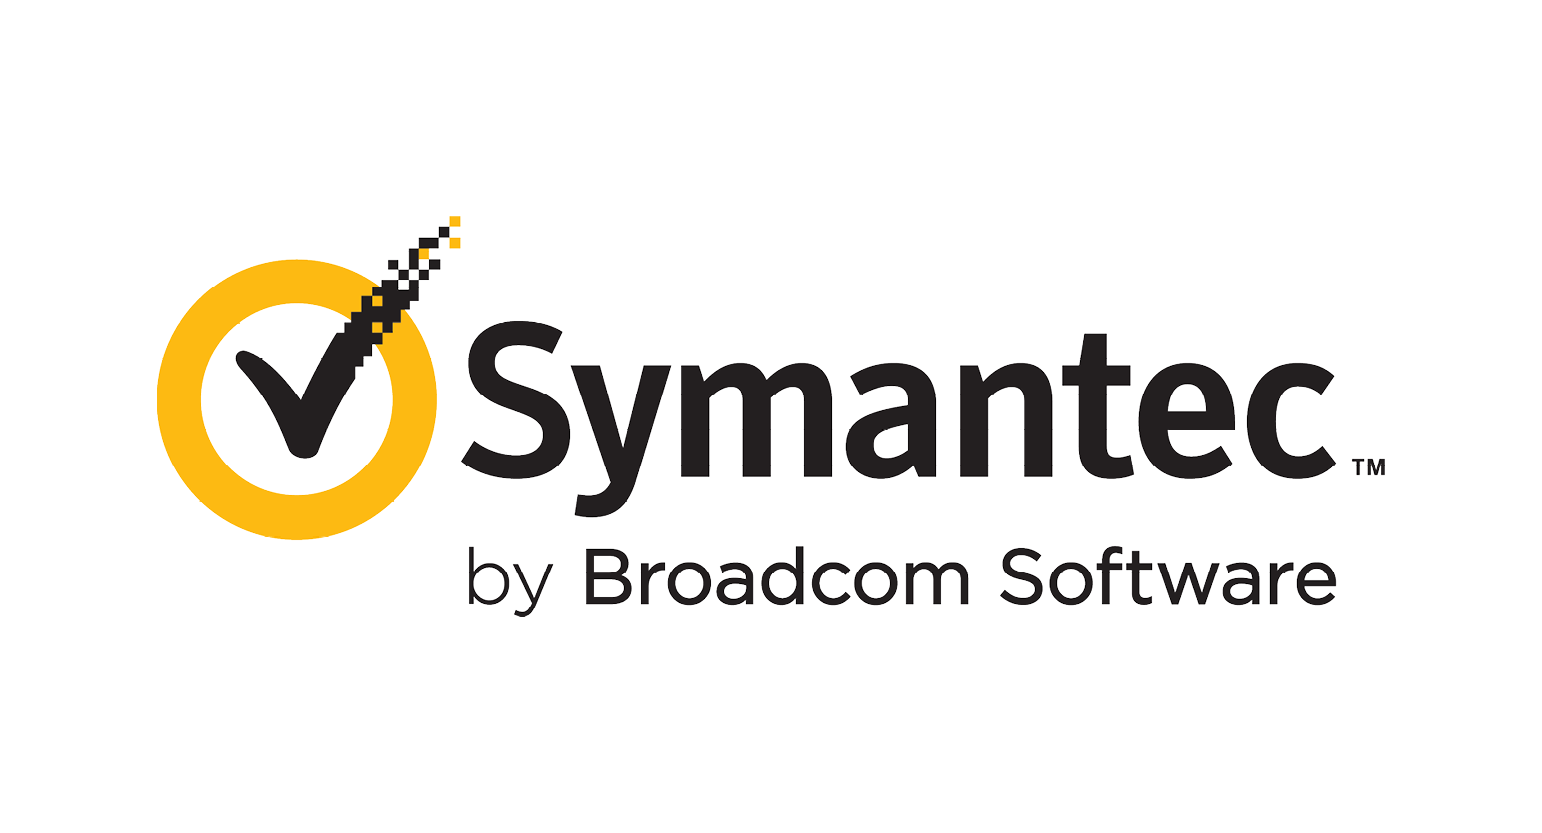 Symantec-Broadcom_Horizontal_yellow-black.png